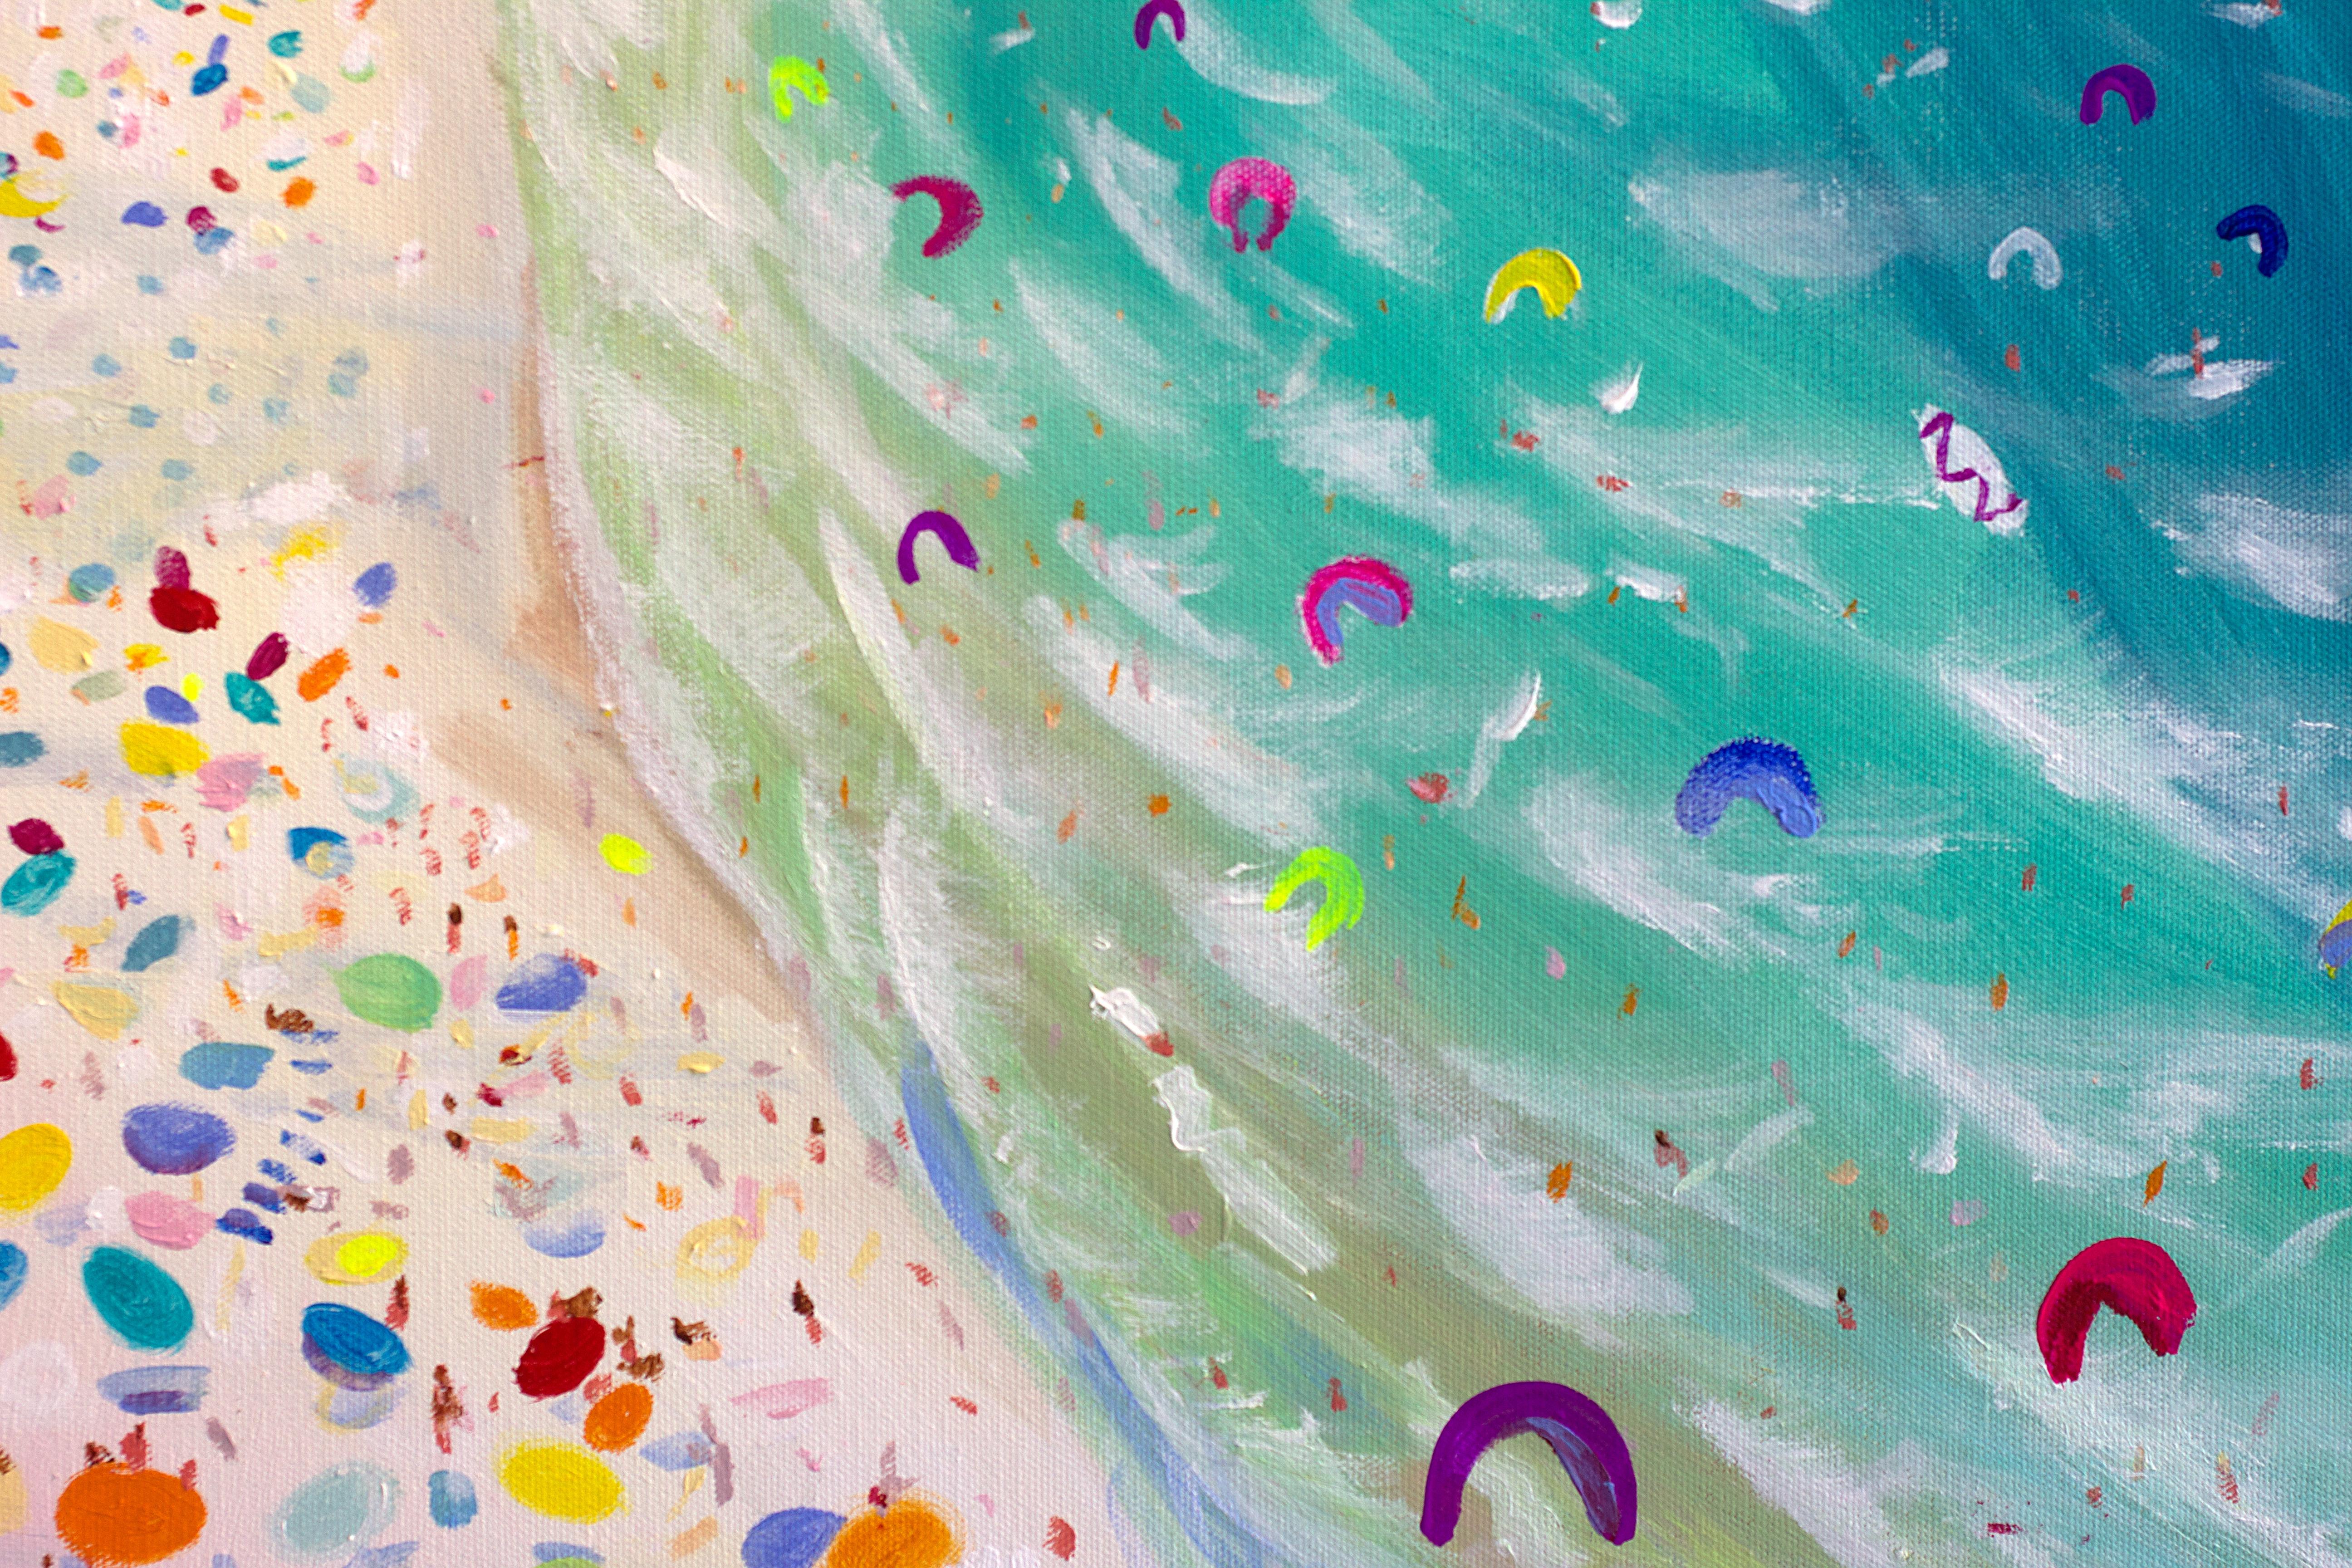 Kite Board Beach - Pop Art Painting by Joe Davis